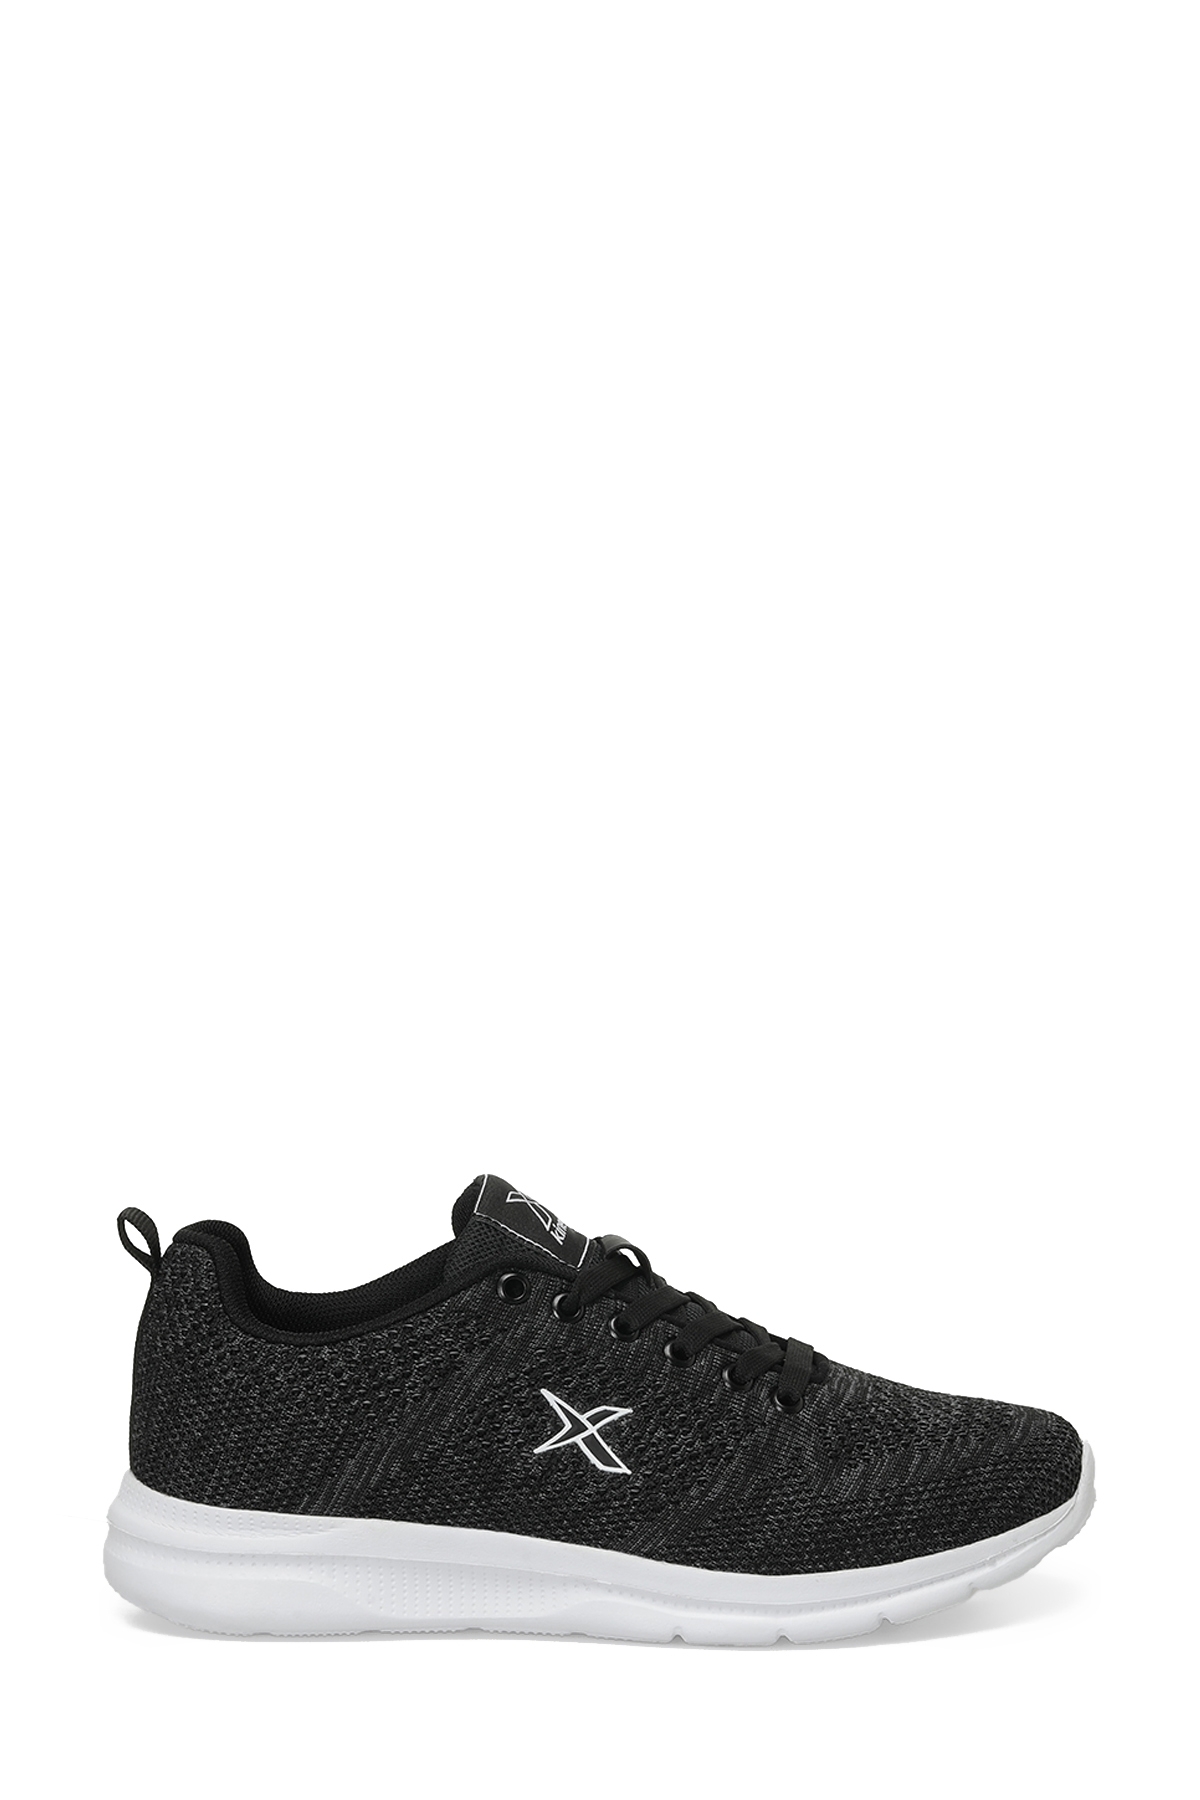 Levně KINETIX FINARE TX 4FX Men's Black Sneaker